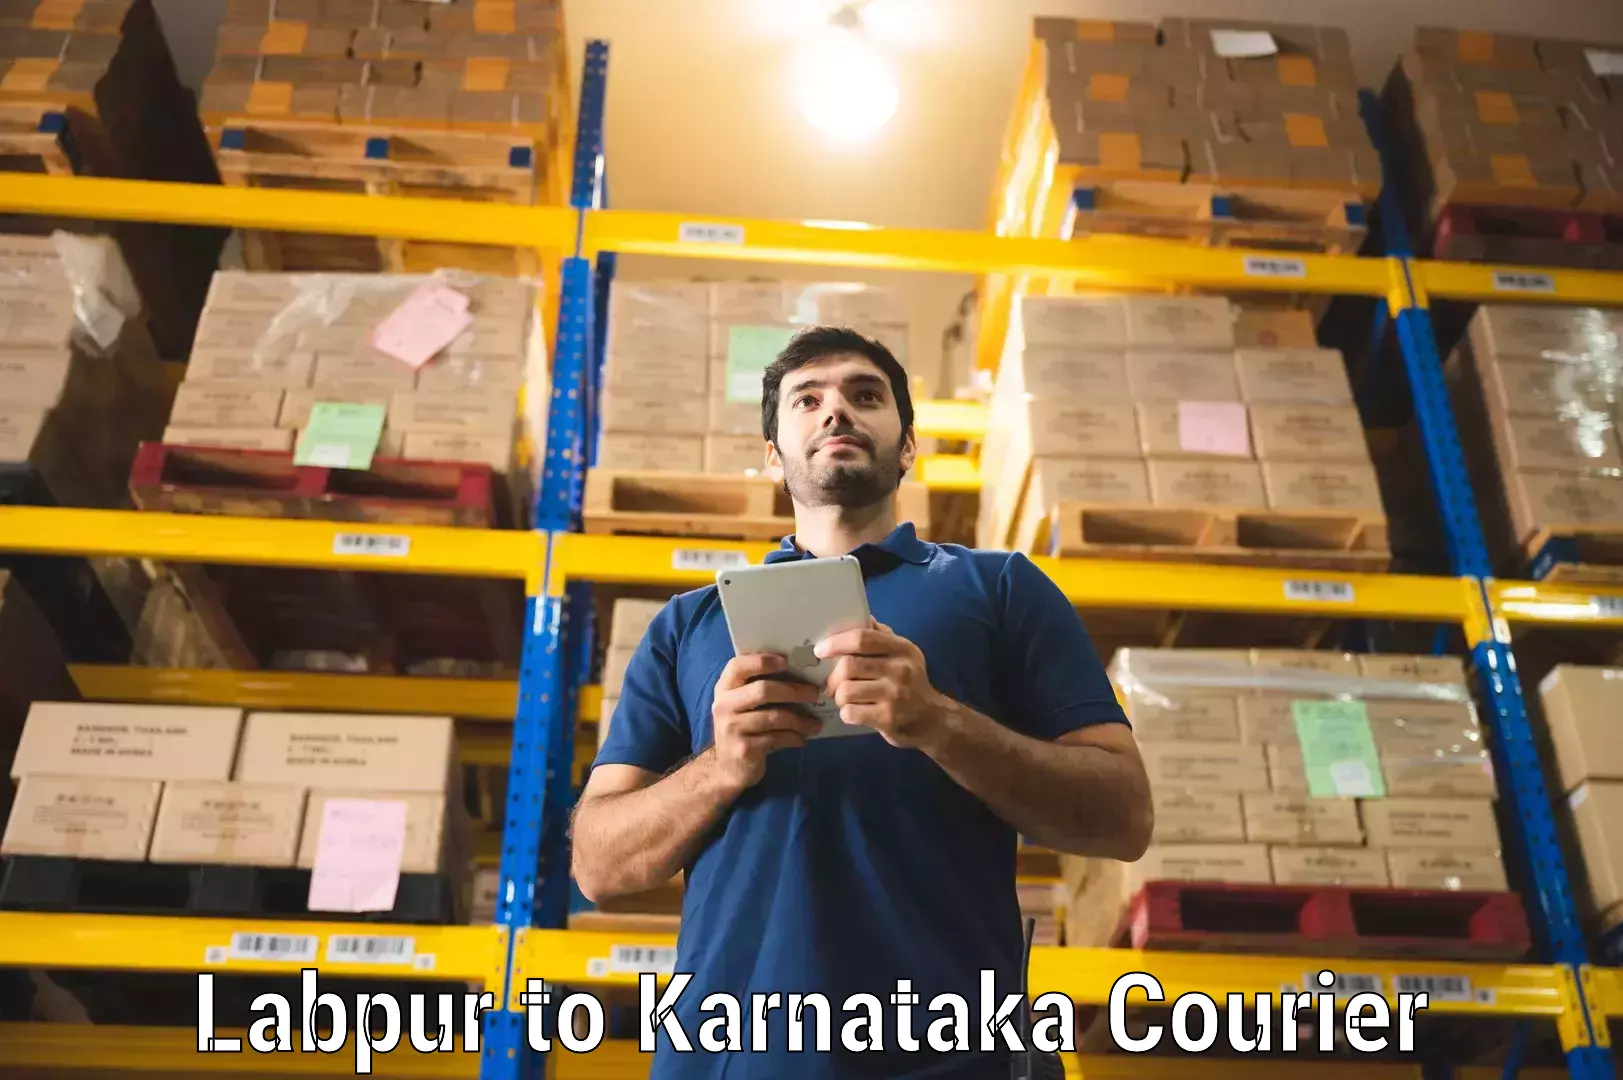 Courier service booking Labpur to Dakshina Kannada